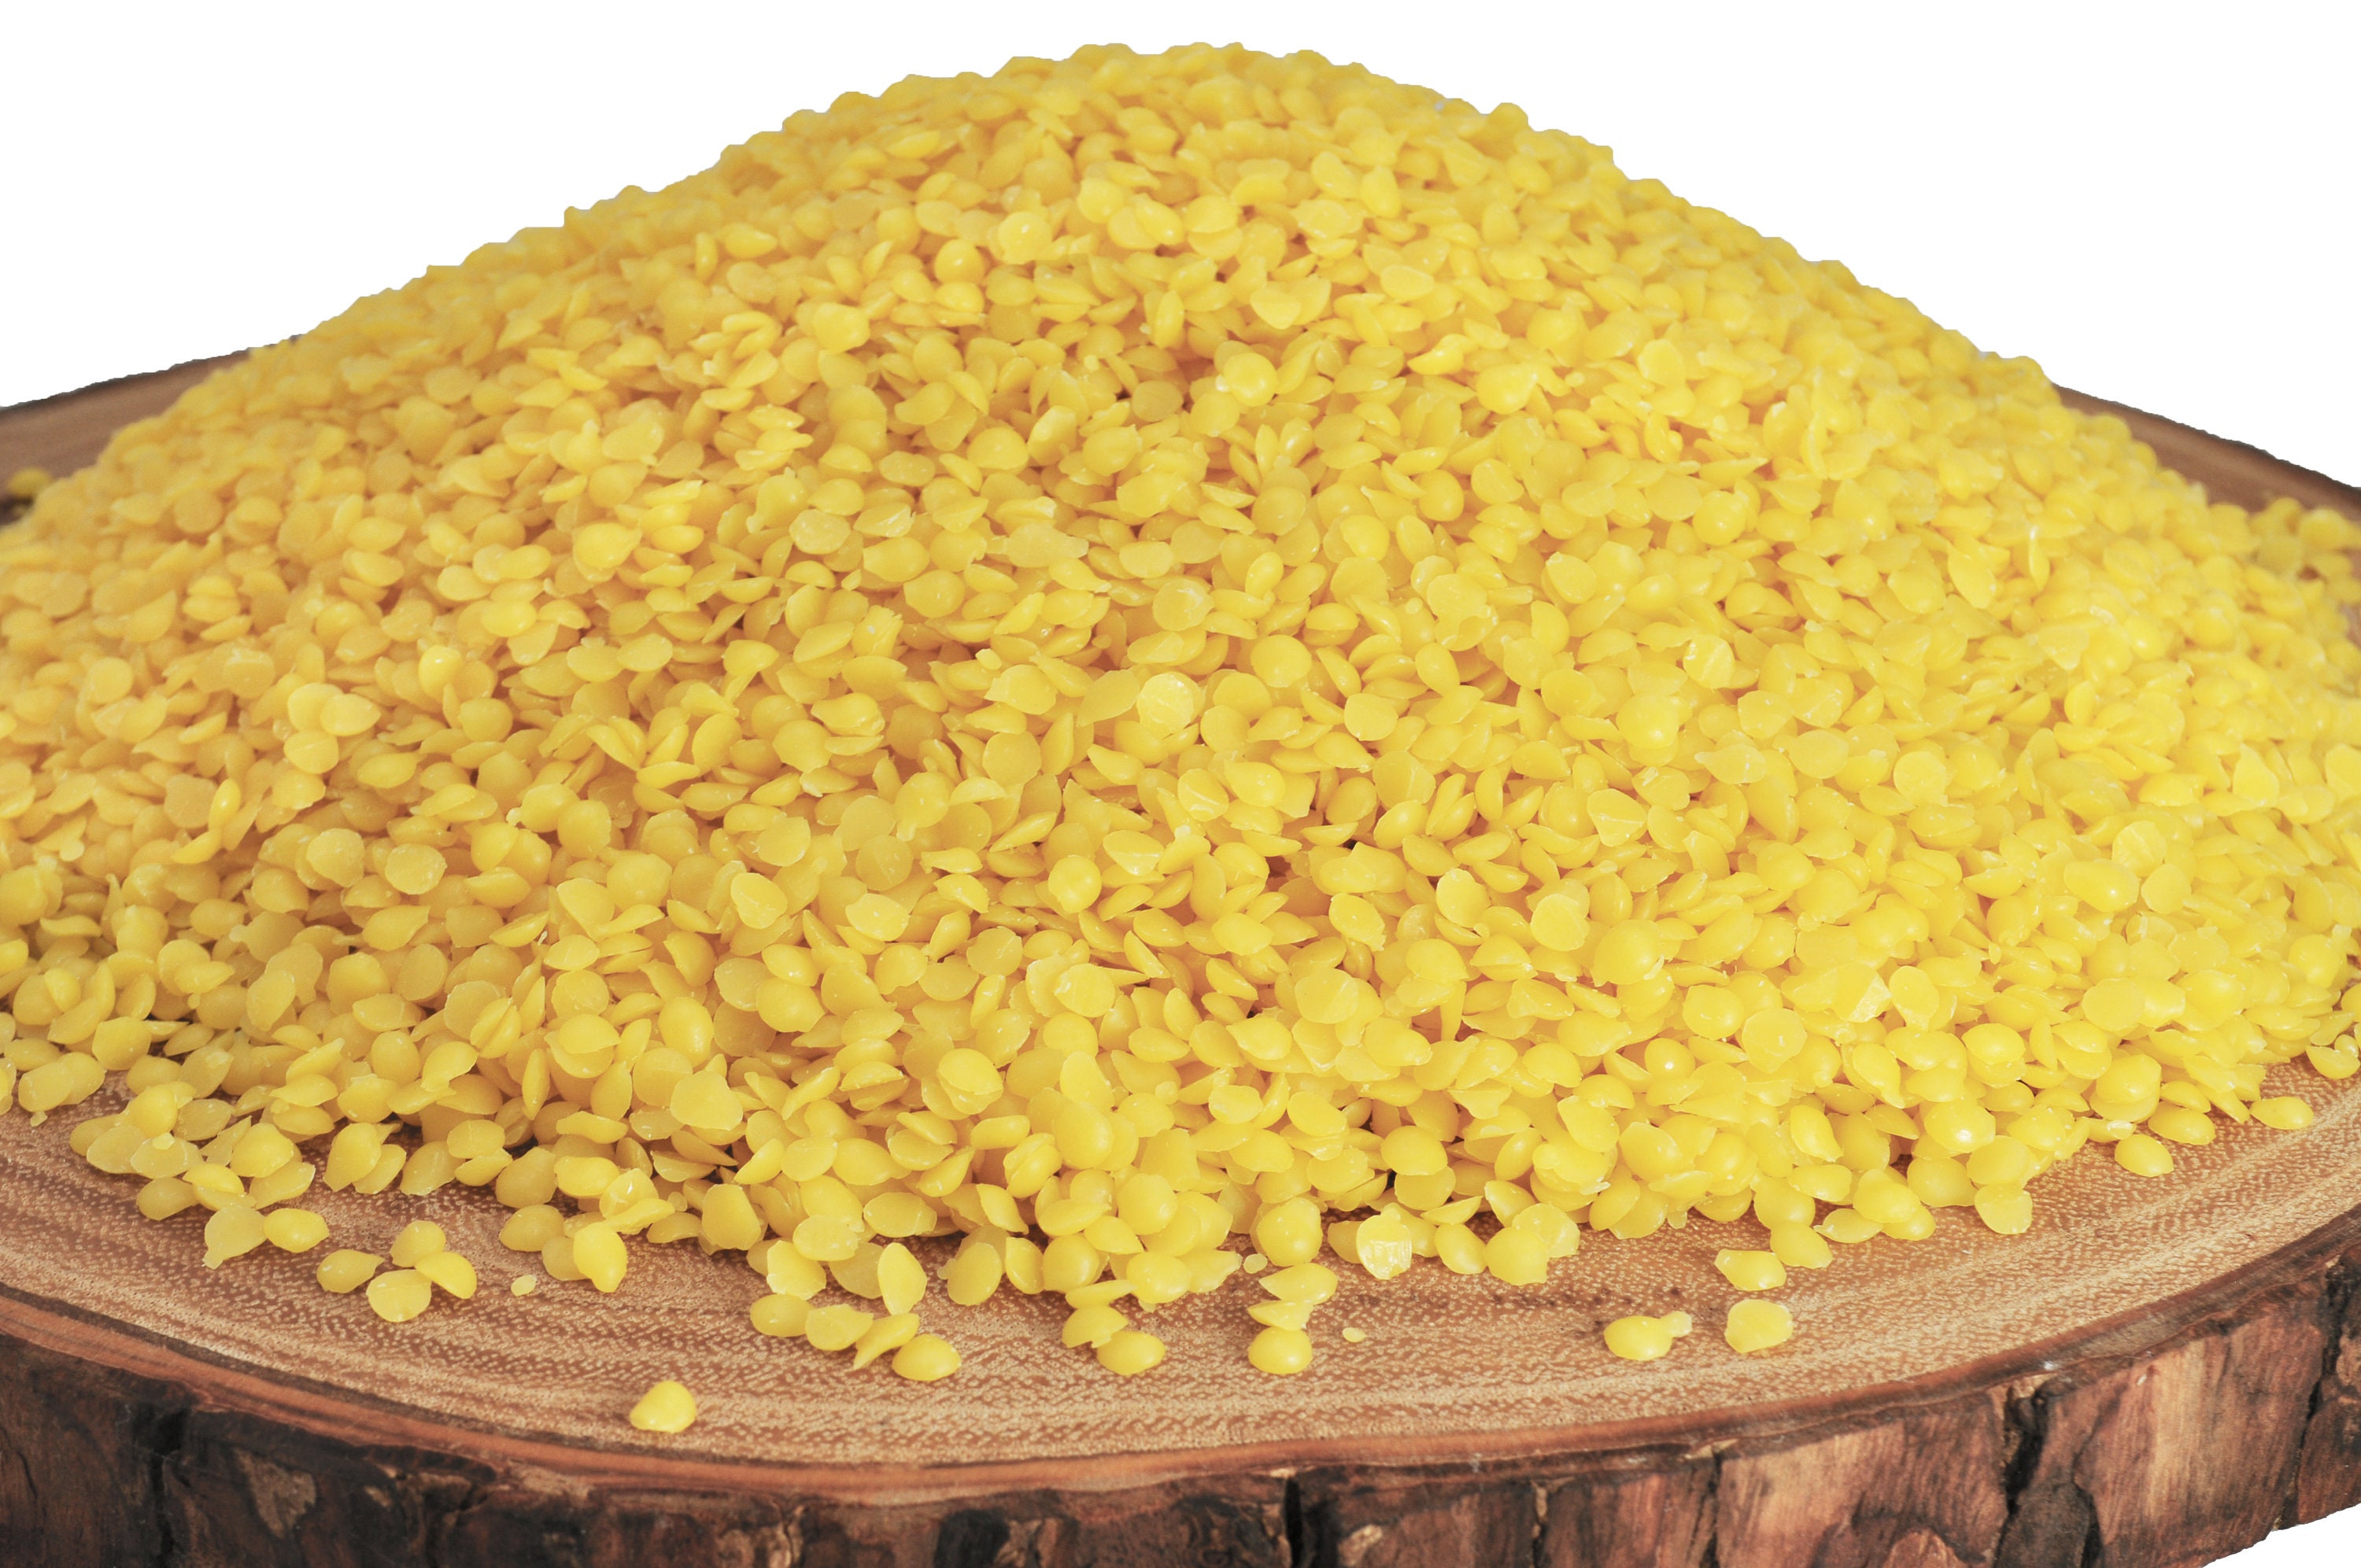 Beeswax Beads – Yellow (USA) – 100% Natural – Wholesale & Bulk Prices